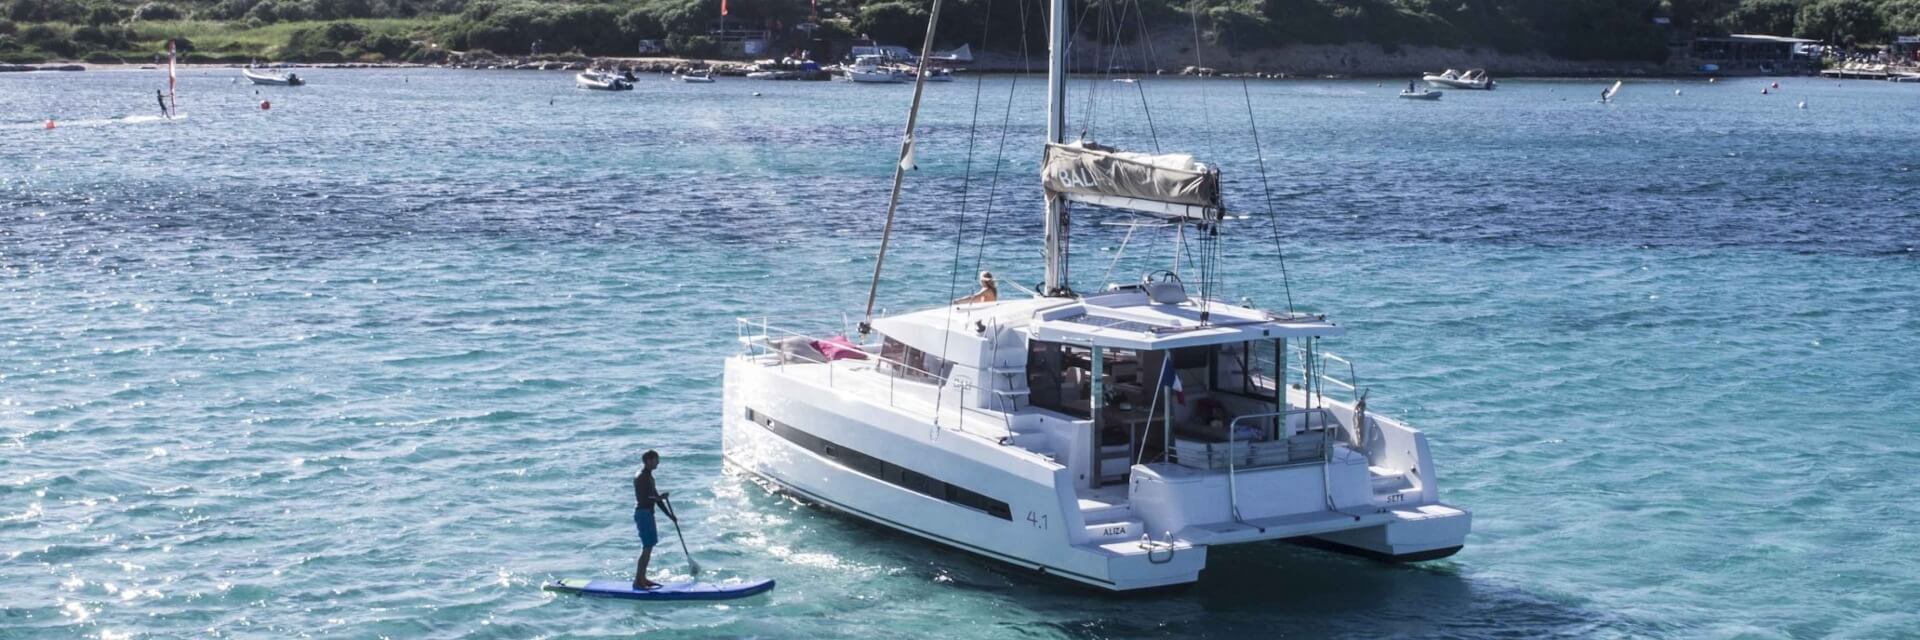 Week charter Ibiza catamaran Bali sailing